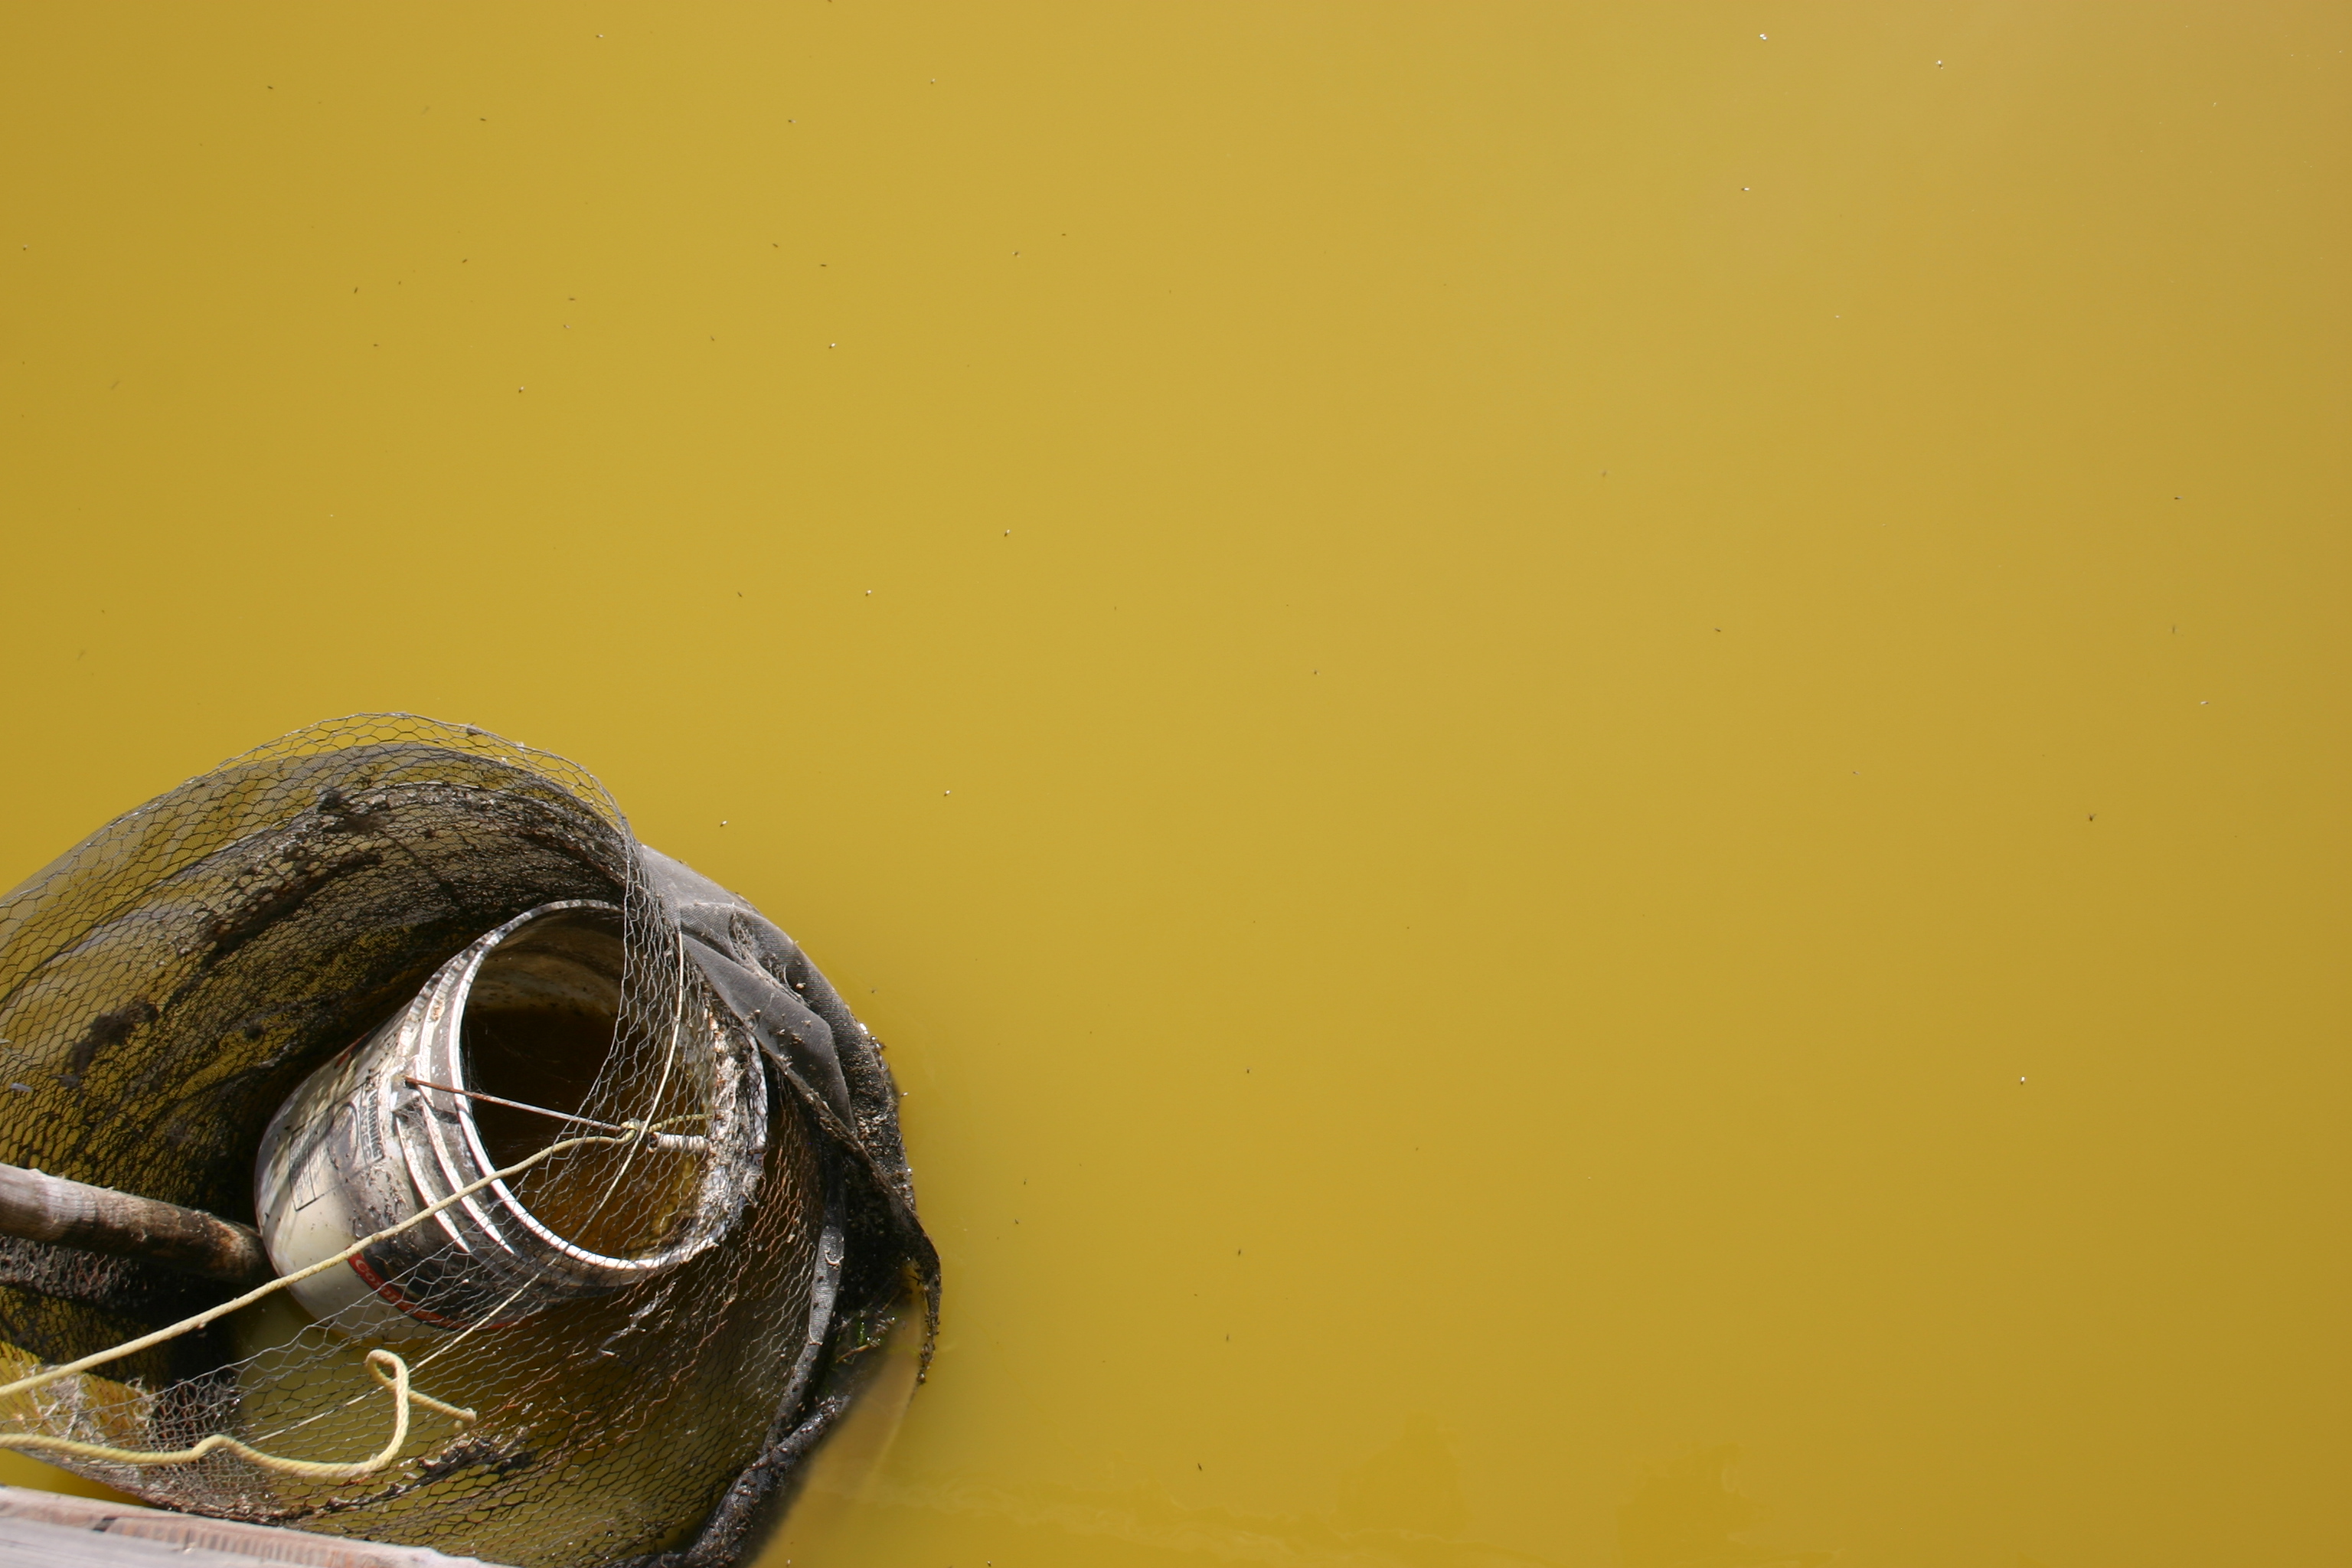 A bucket lies forgotten in stagnant green water near a bridge.